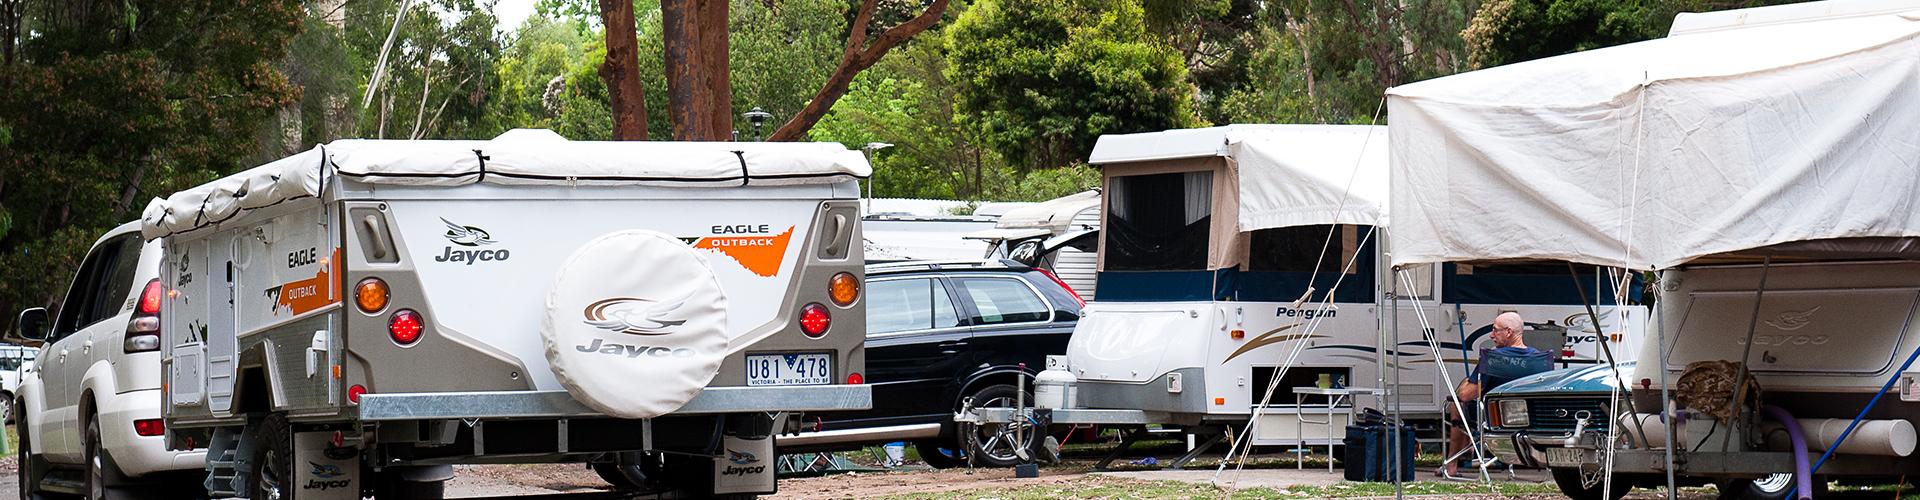 BIG4 Yarra Valley Park Lane Holiday Park - Powered Caravan and Motorhome sites - Car Driving in